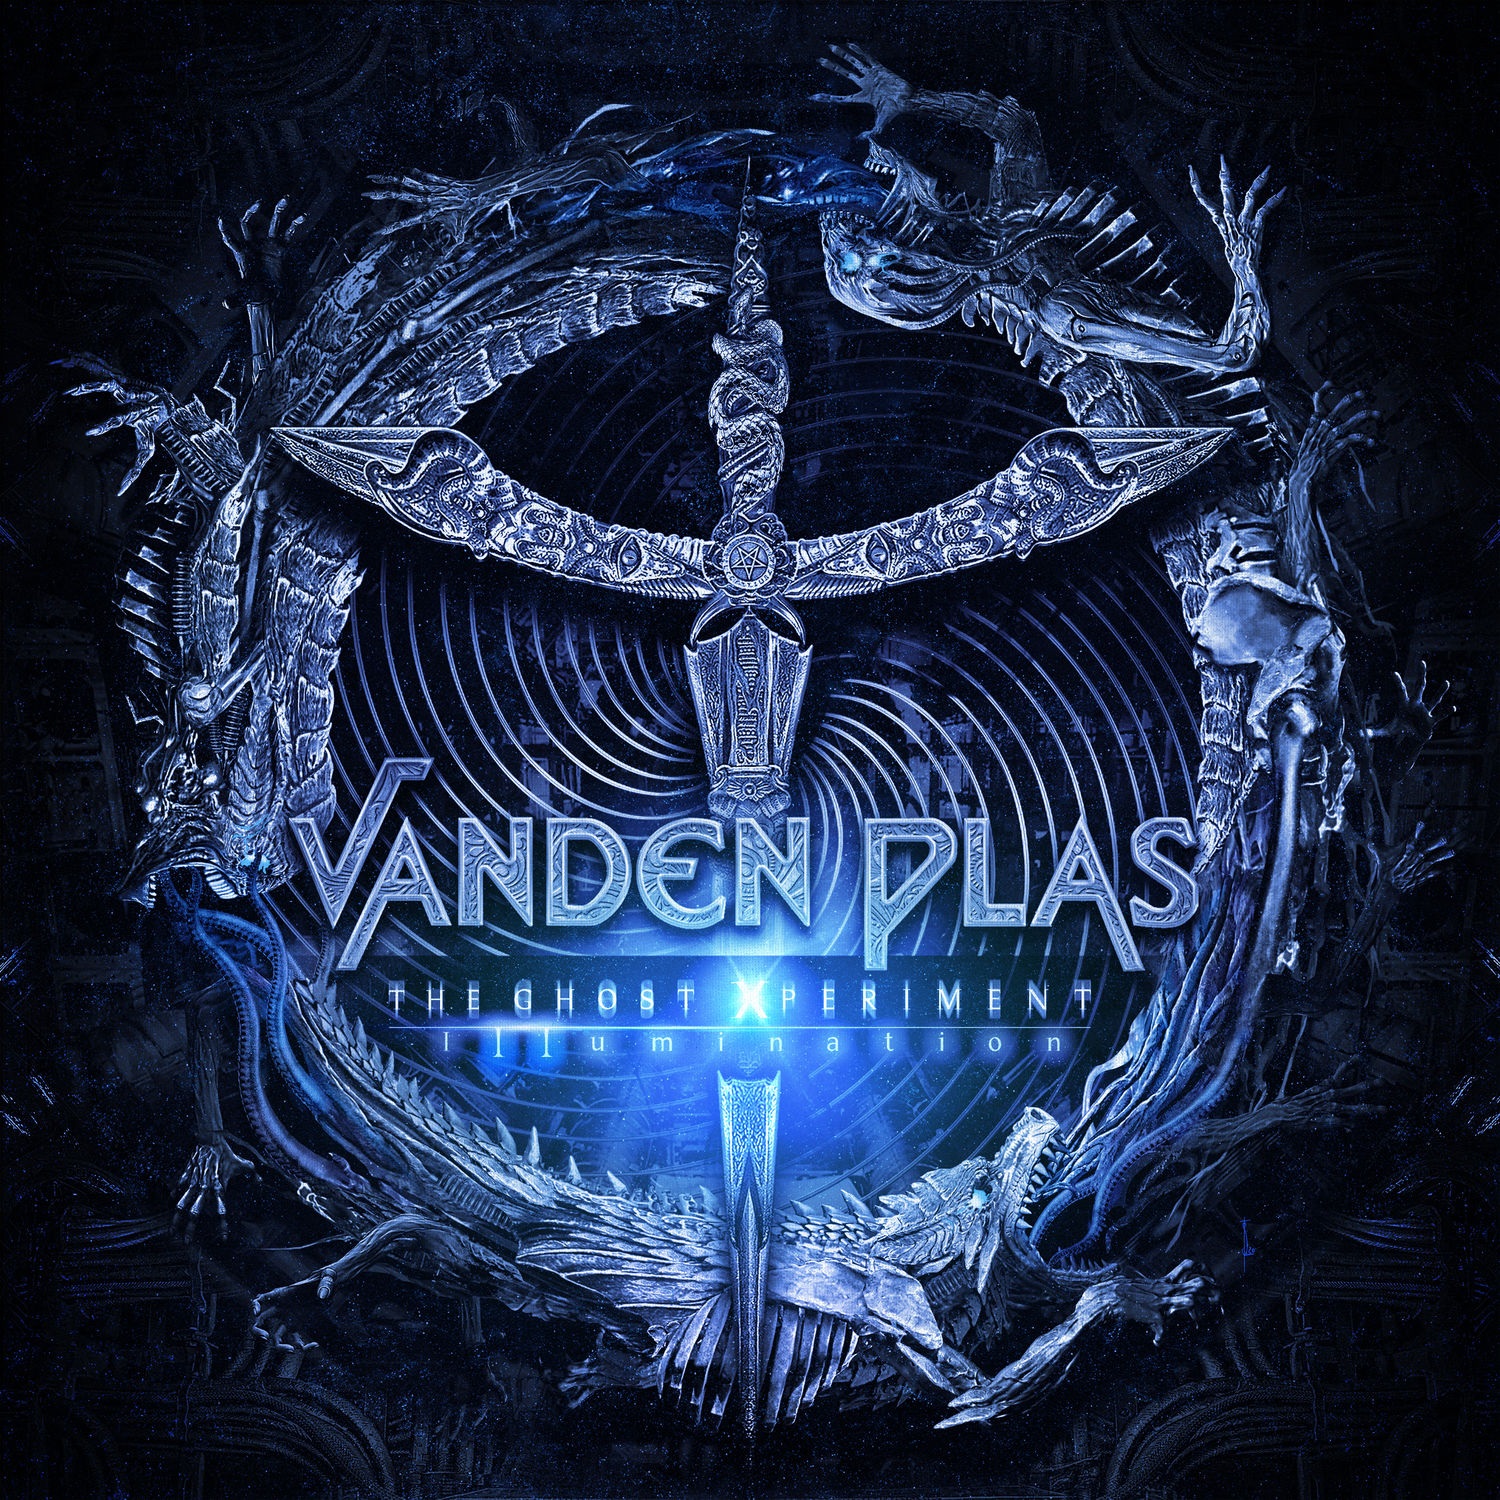 Vanden Plas - The Ghost Xperiment (Illumination) (2020) [FLAC 24bit/44,1kHz]